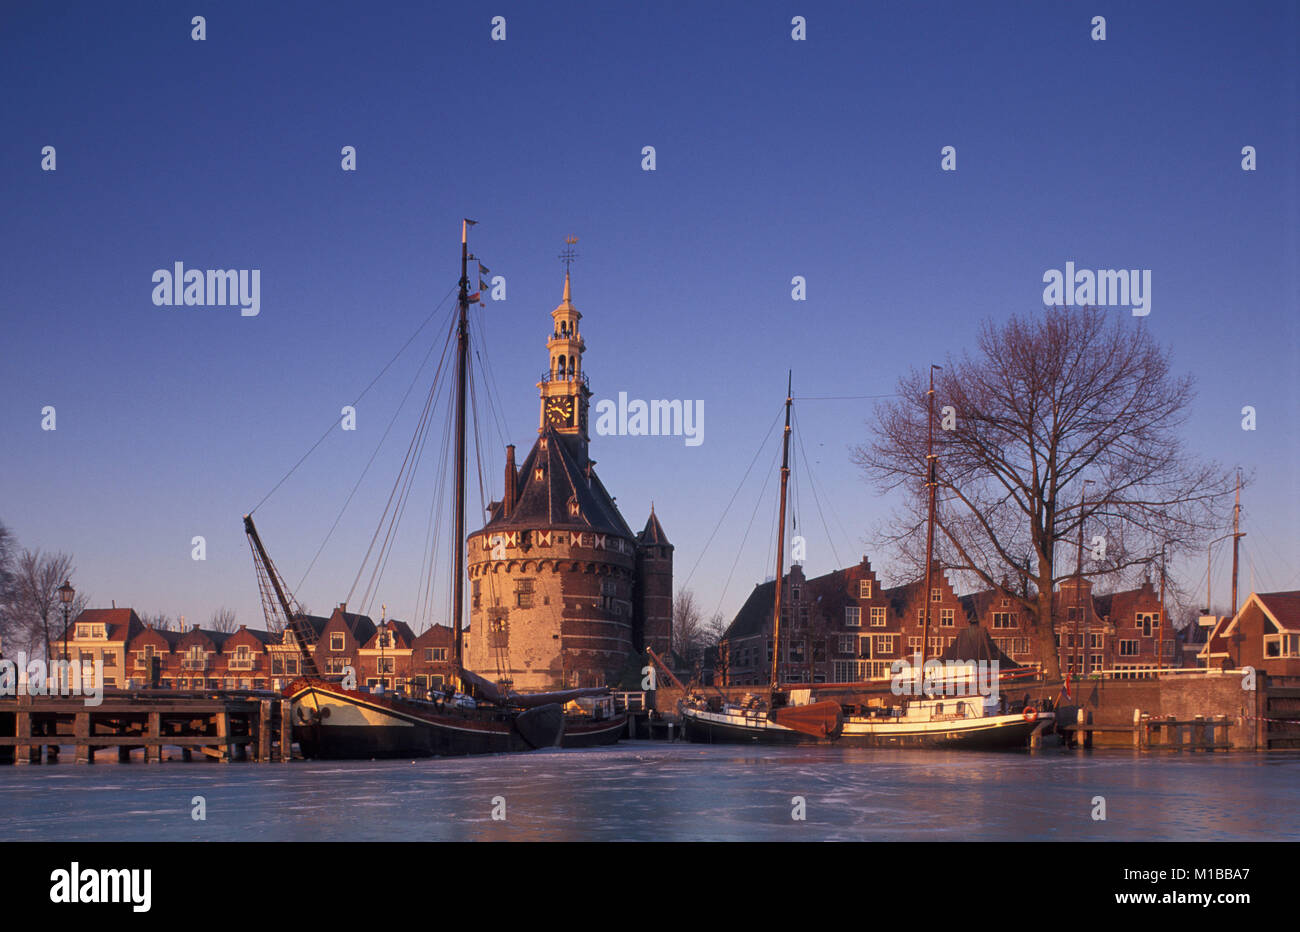 Die Niederlande. Hoorn. Alten Hafen aus dem 16. Jahrhundert. Turm namens Hoofdtoren. Winter. Eis. Stockfoto